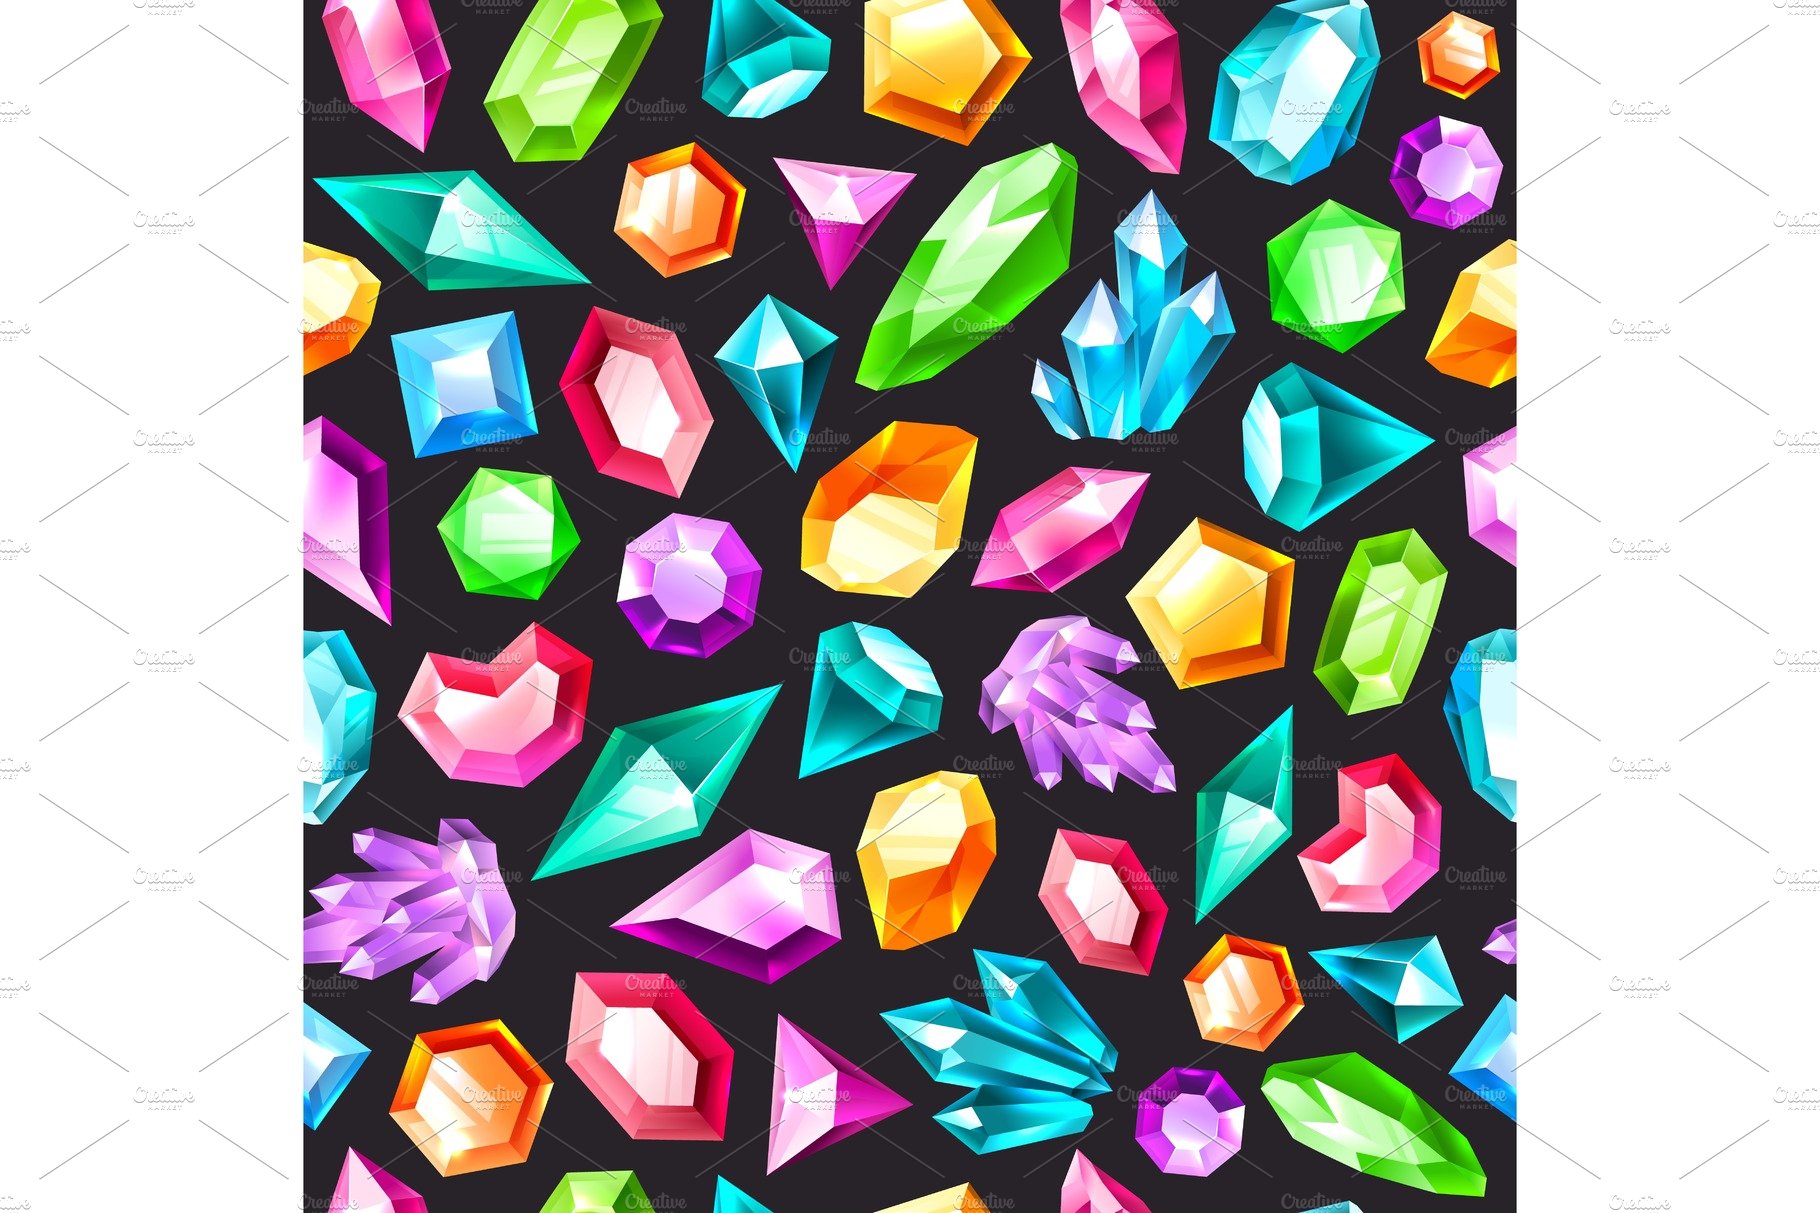 Gem seamless pattern. Gemstones cover image.